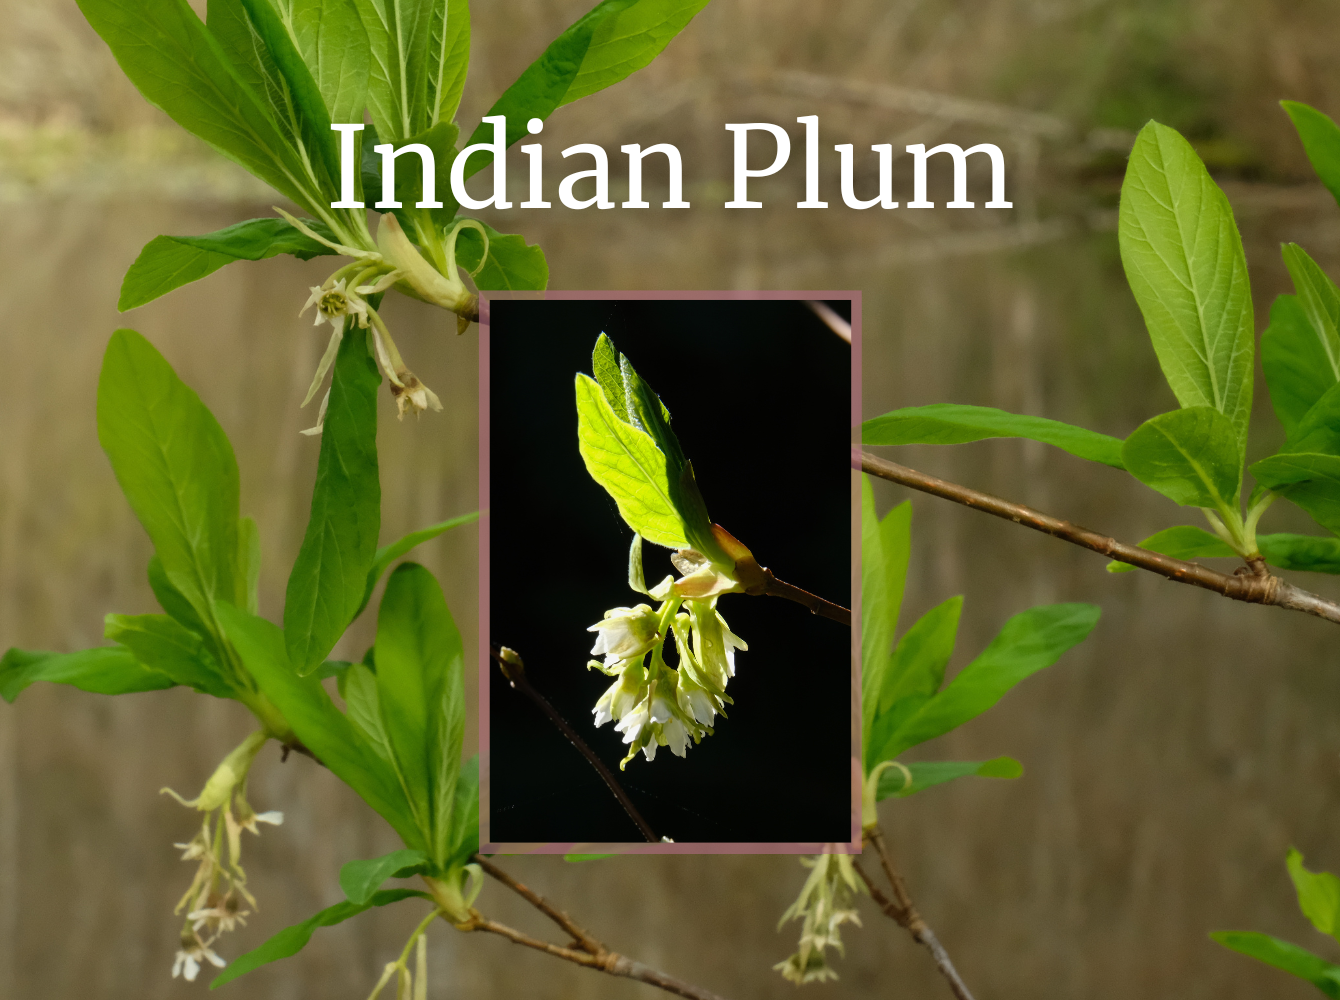 Indian plum bloom